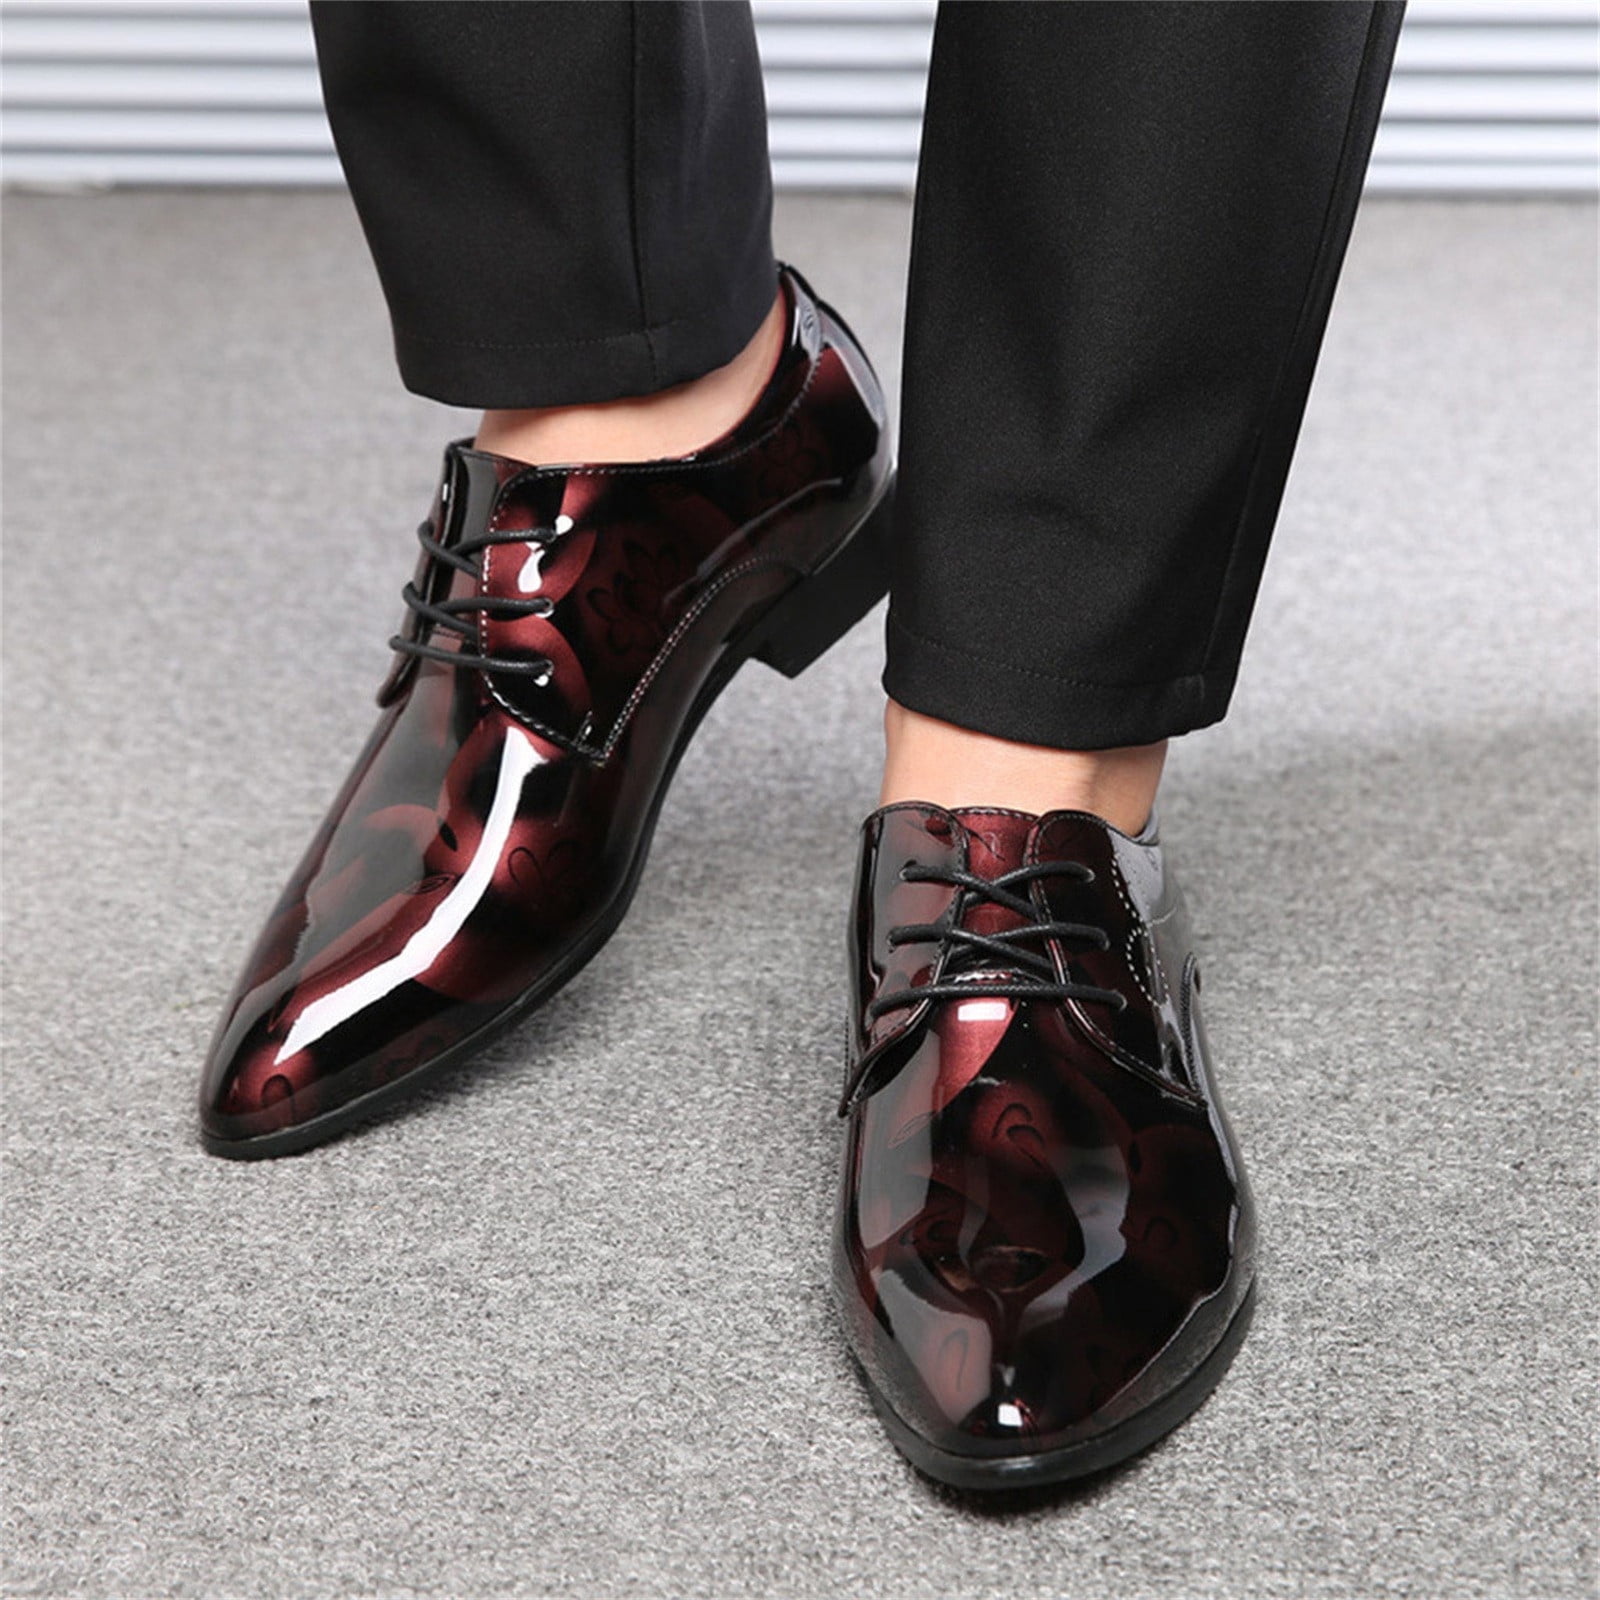 Men's Fashion Casual Pointed Toe Shoes Dress Business Shoes Plus Size US6-9.5 